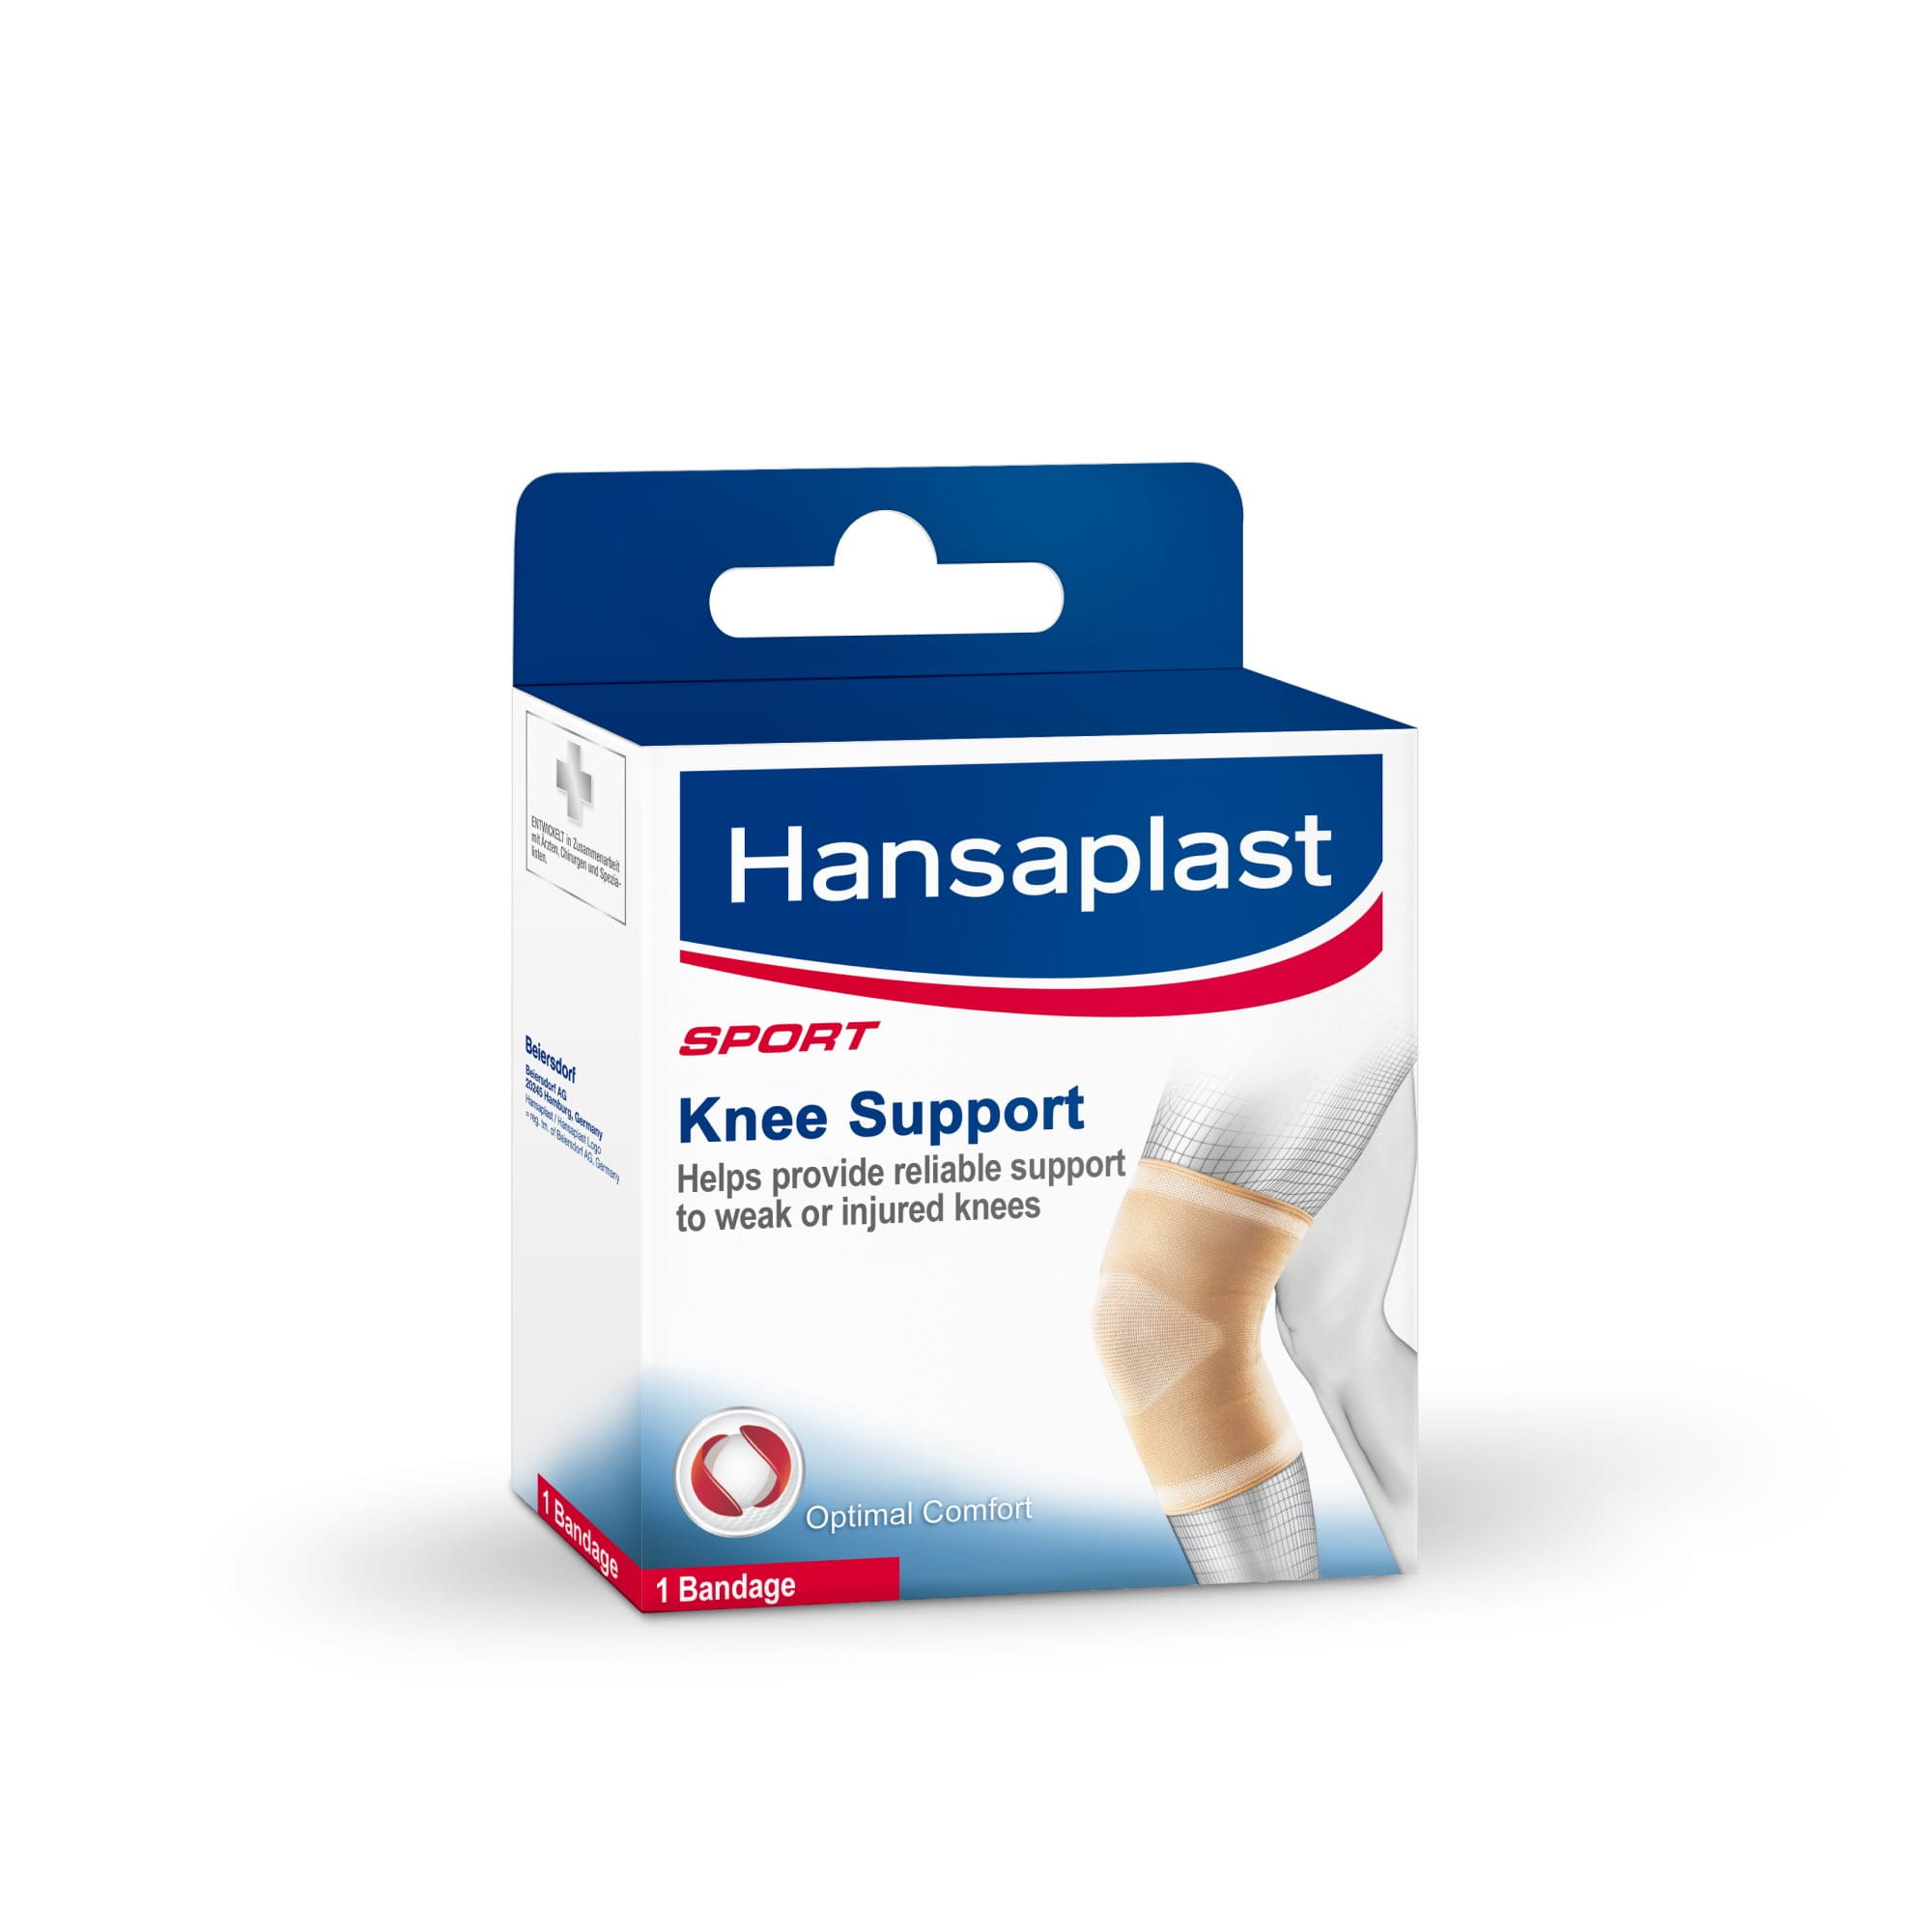 Hansaplast Knee Support Bandage - For Injured Knees